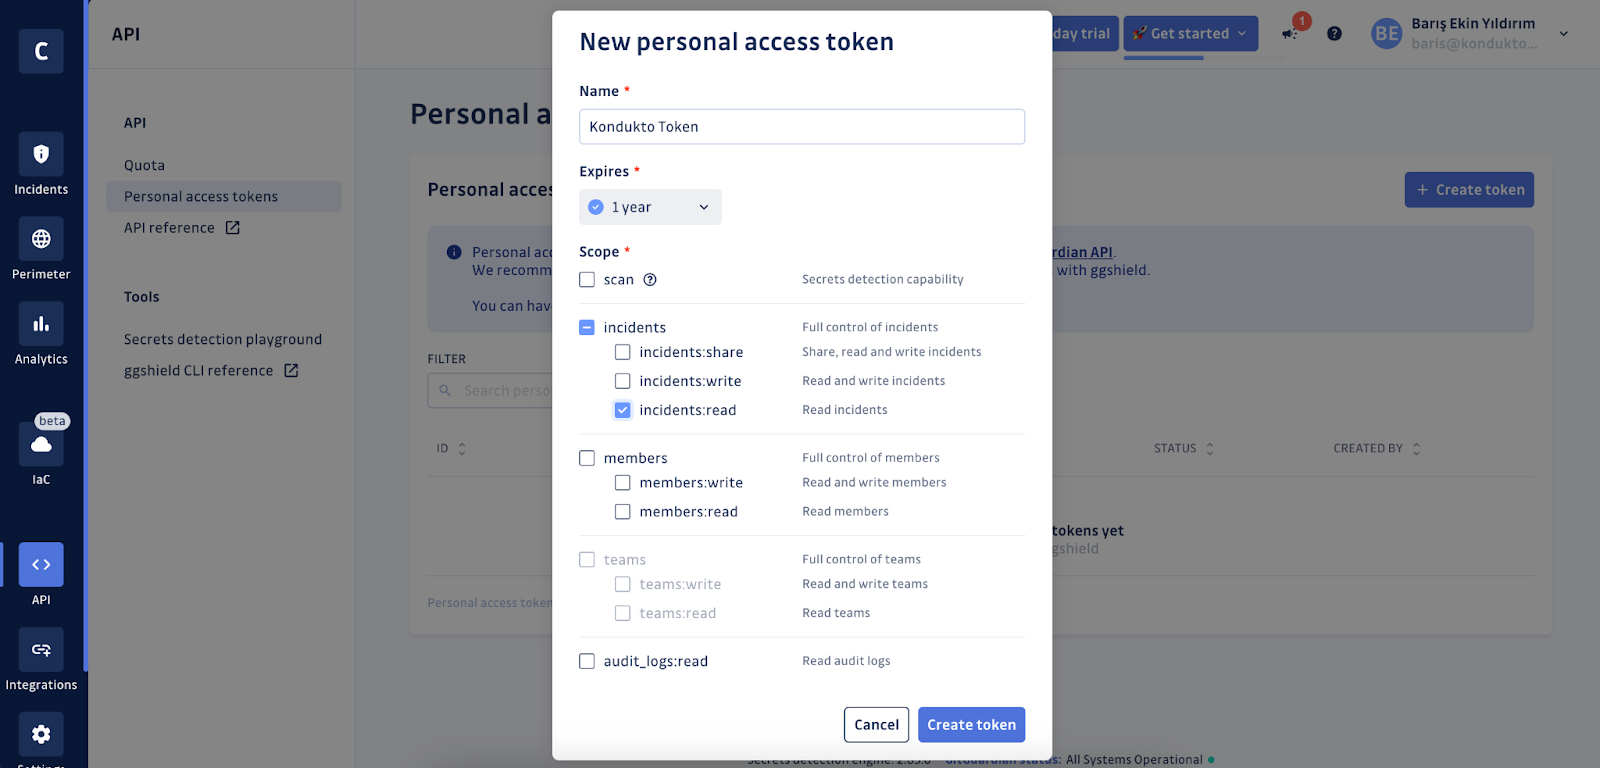 Create a personal access token in GitGuardian (screenshot)